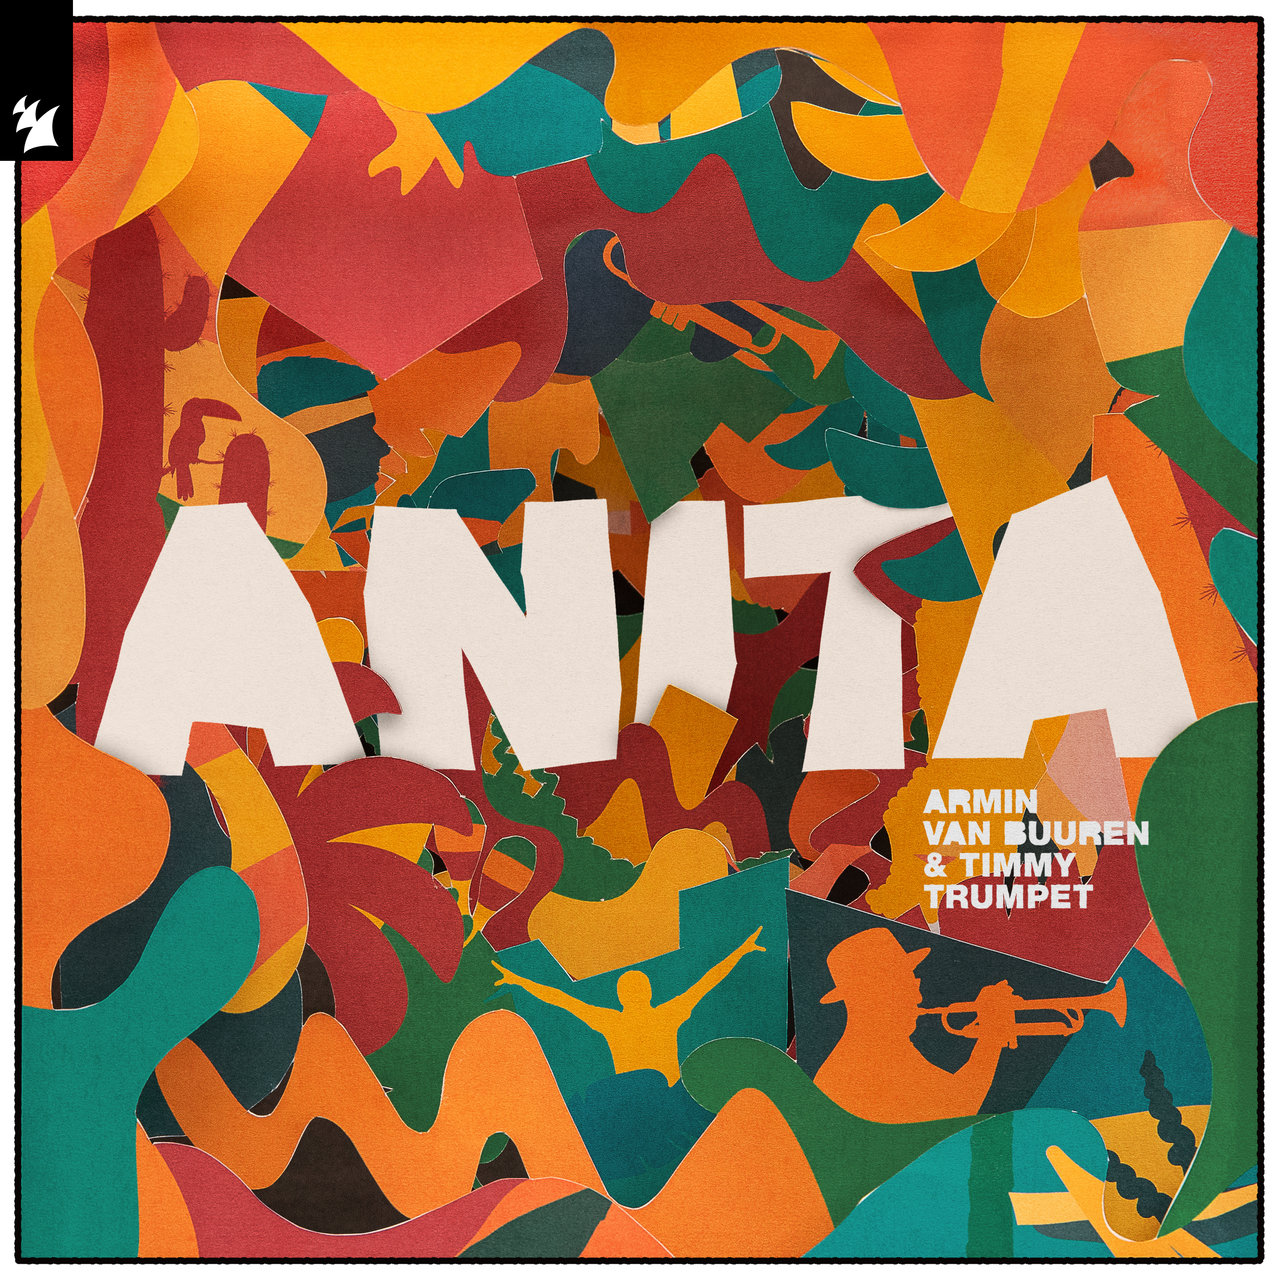 Armin van Buuren & Timmy Trumpet — Anita cover artwork